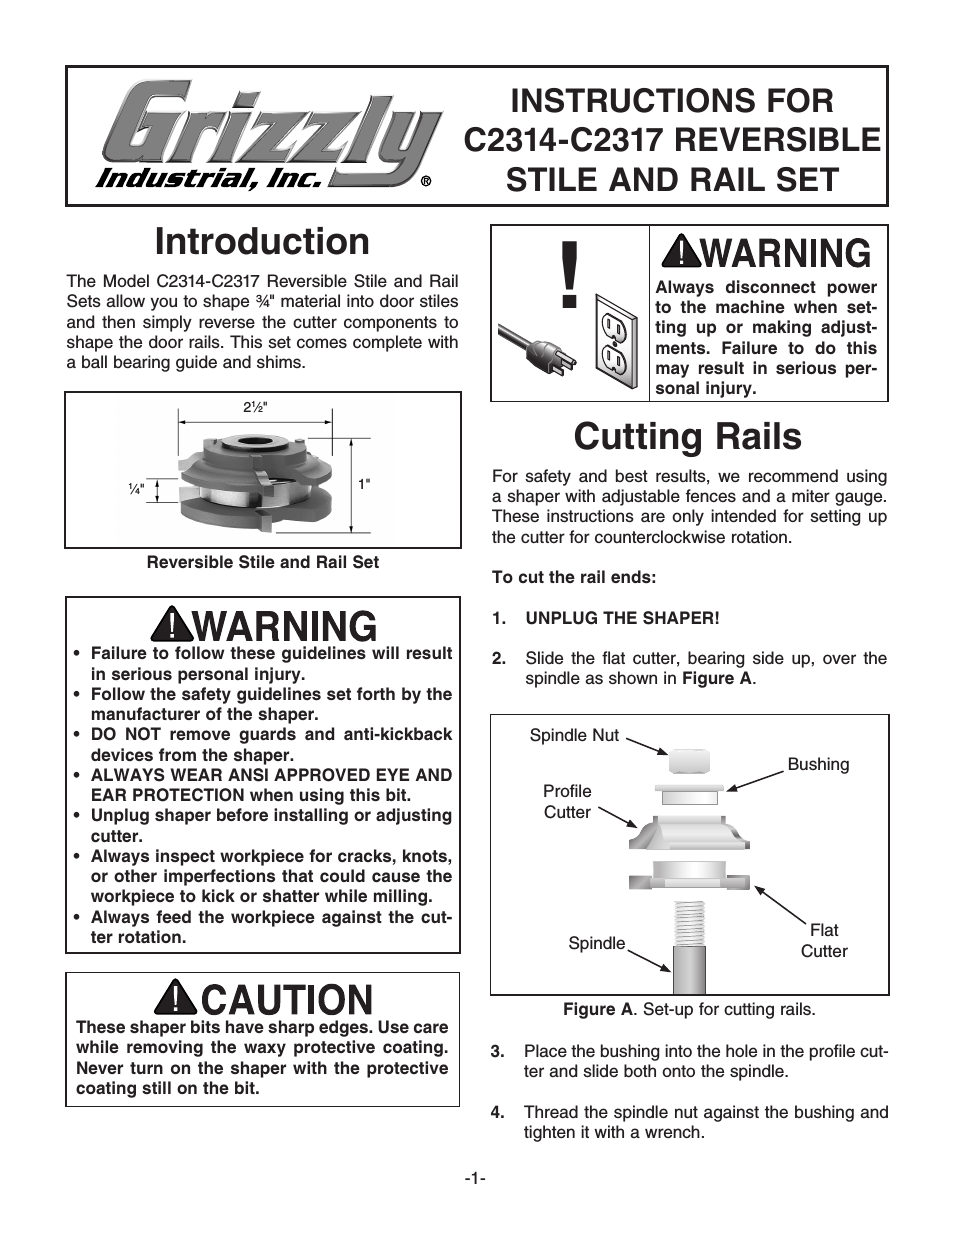 Stile and Rail Set C2314-C2317